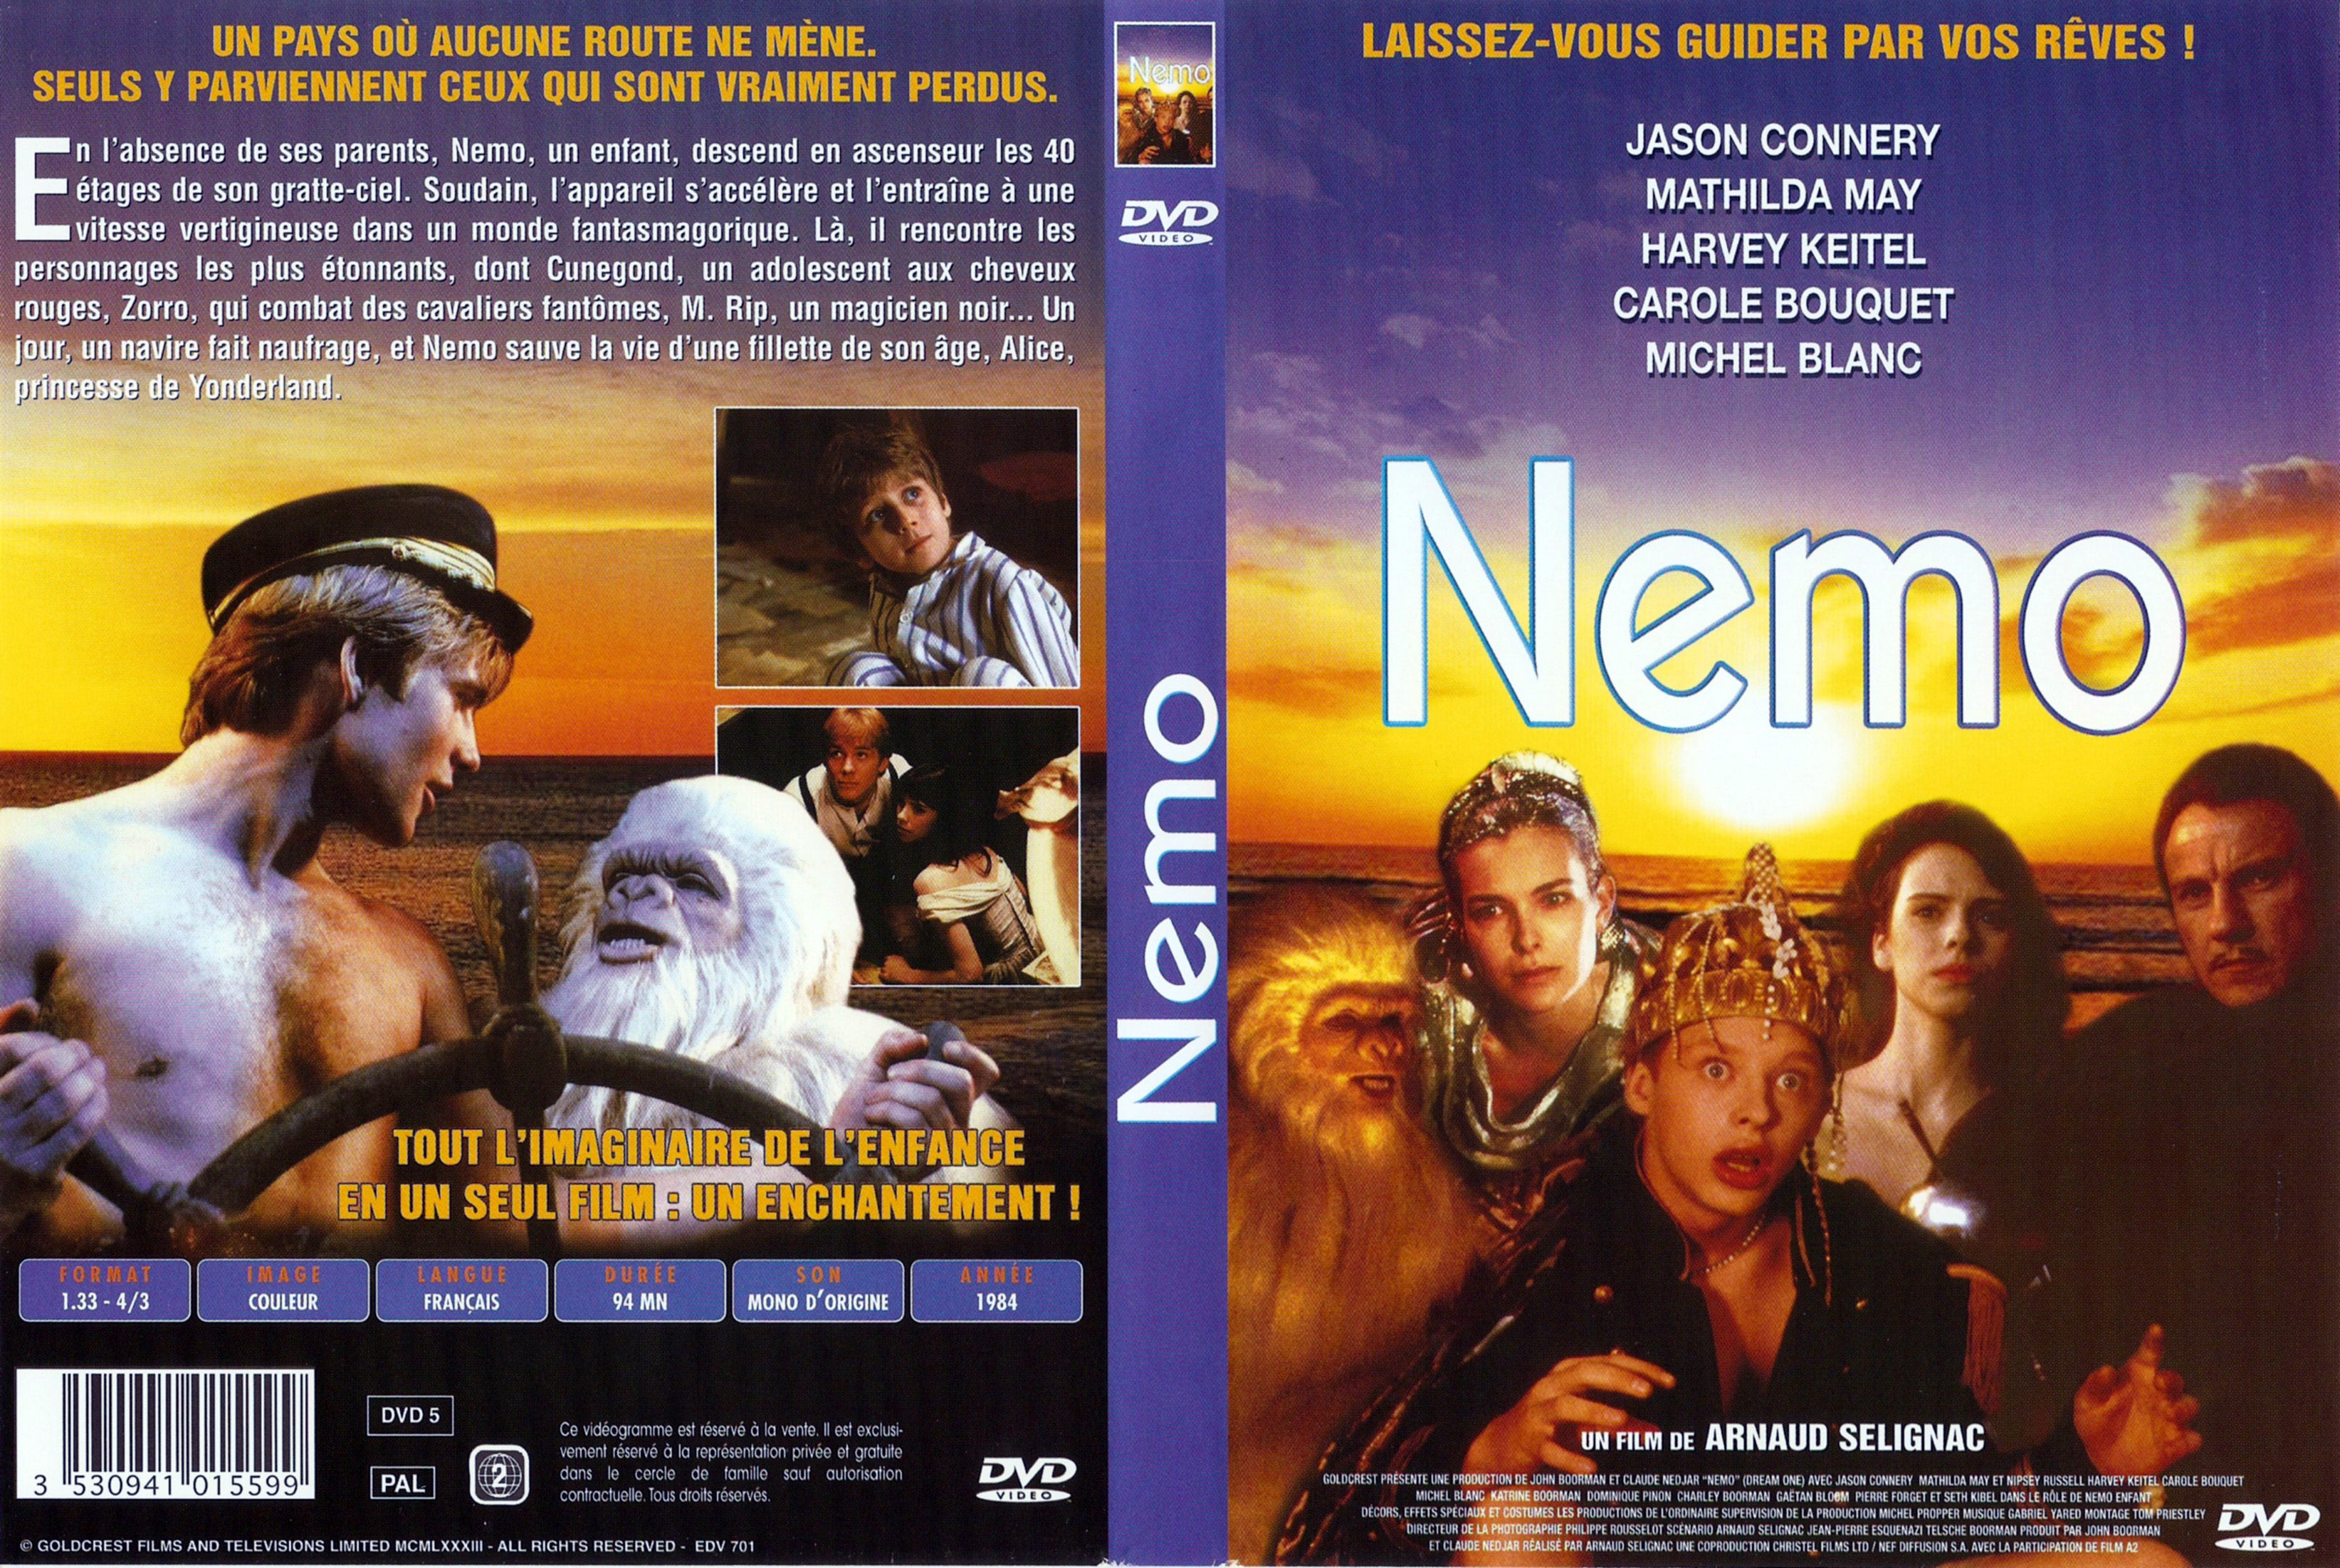 Jaquette DVD Nemo